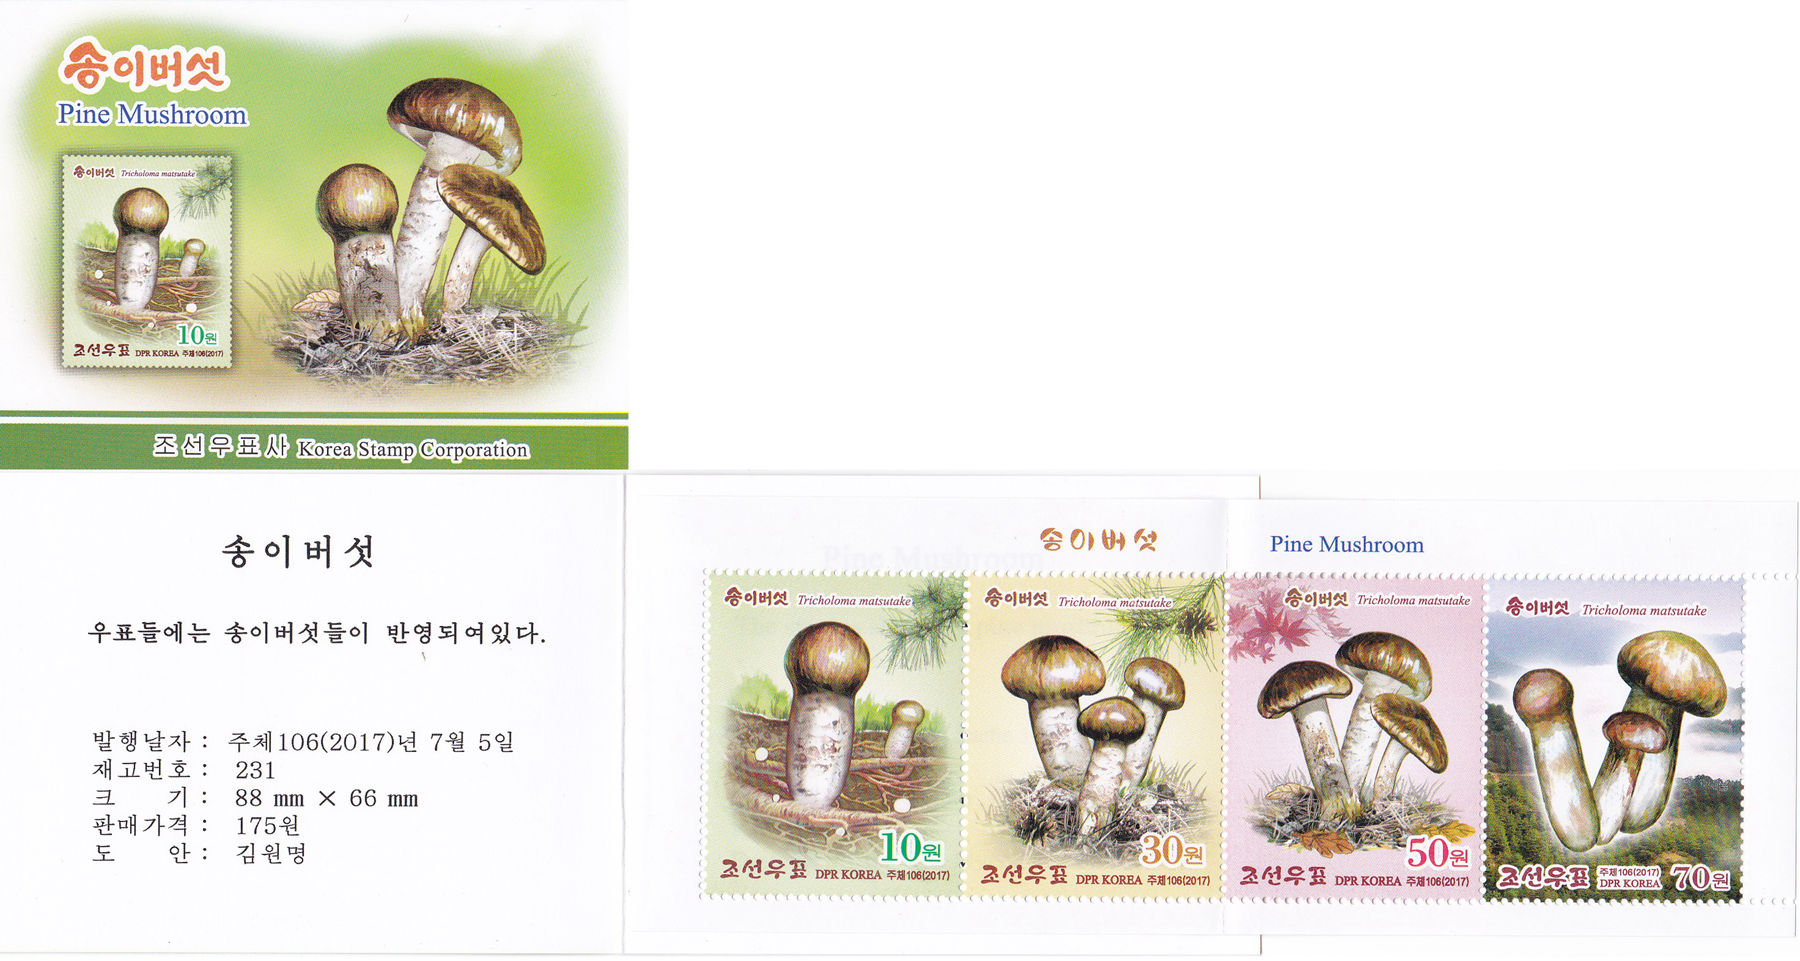 L9006, Korea Mushroom Stamp Booklet, 2017